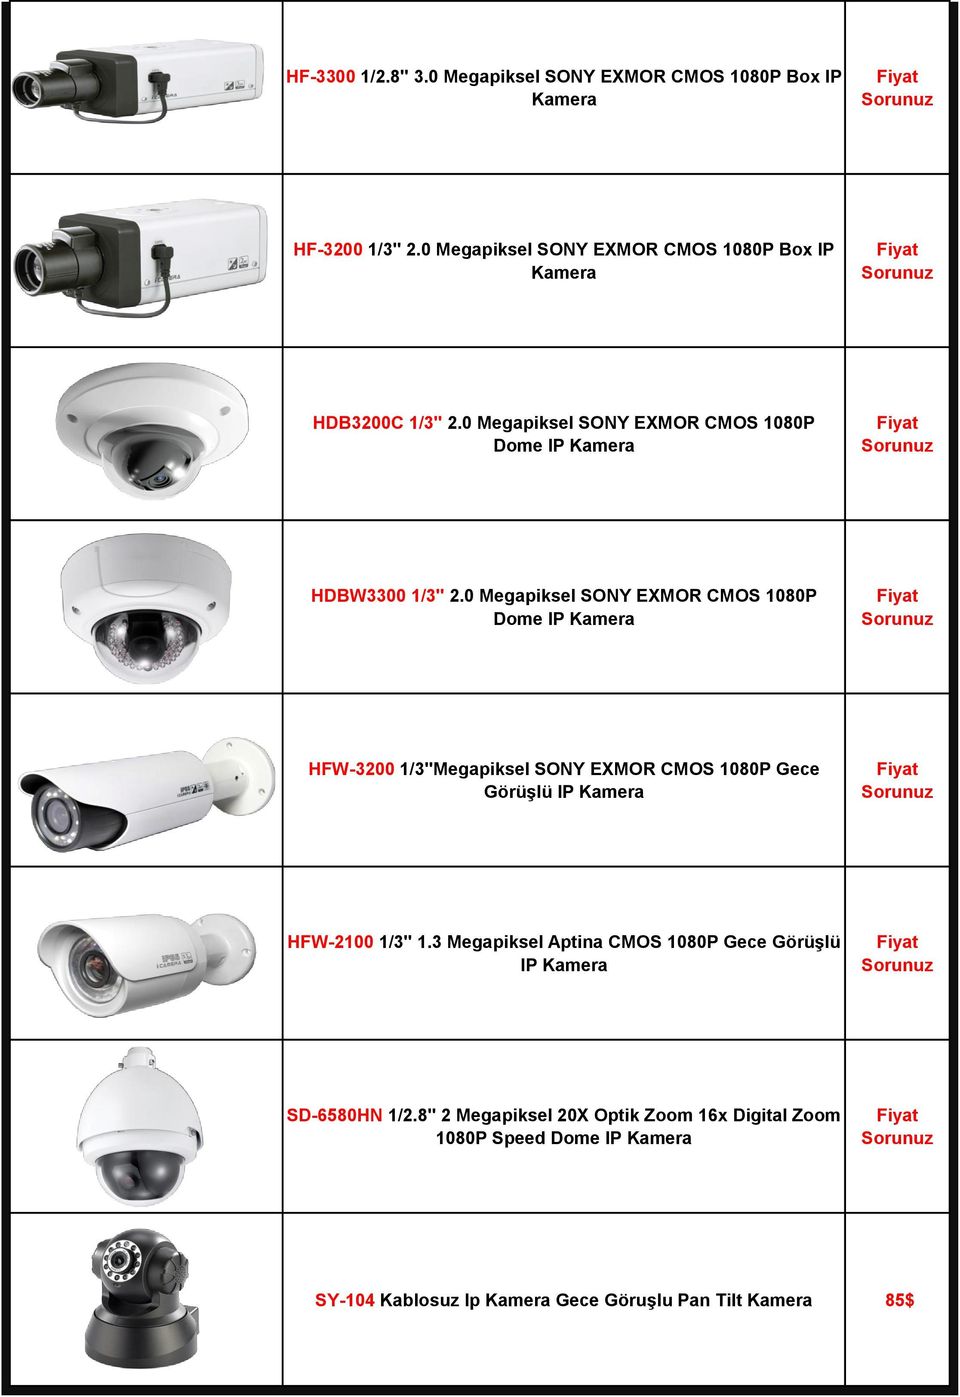 0 Megapiksel SONY EXMOR CMOS 1080P Dome IP Kamera HFW-3200 1/3''Megapiksel SONY EXMOR CMOS 1080P Gece Görüşlü IP Kamera HFW-2100 1/3'' 1.